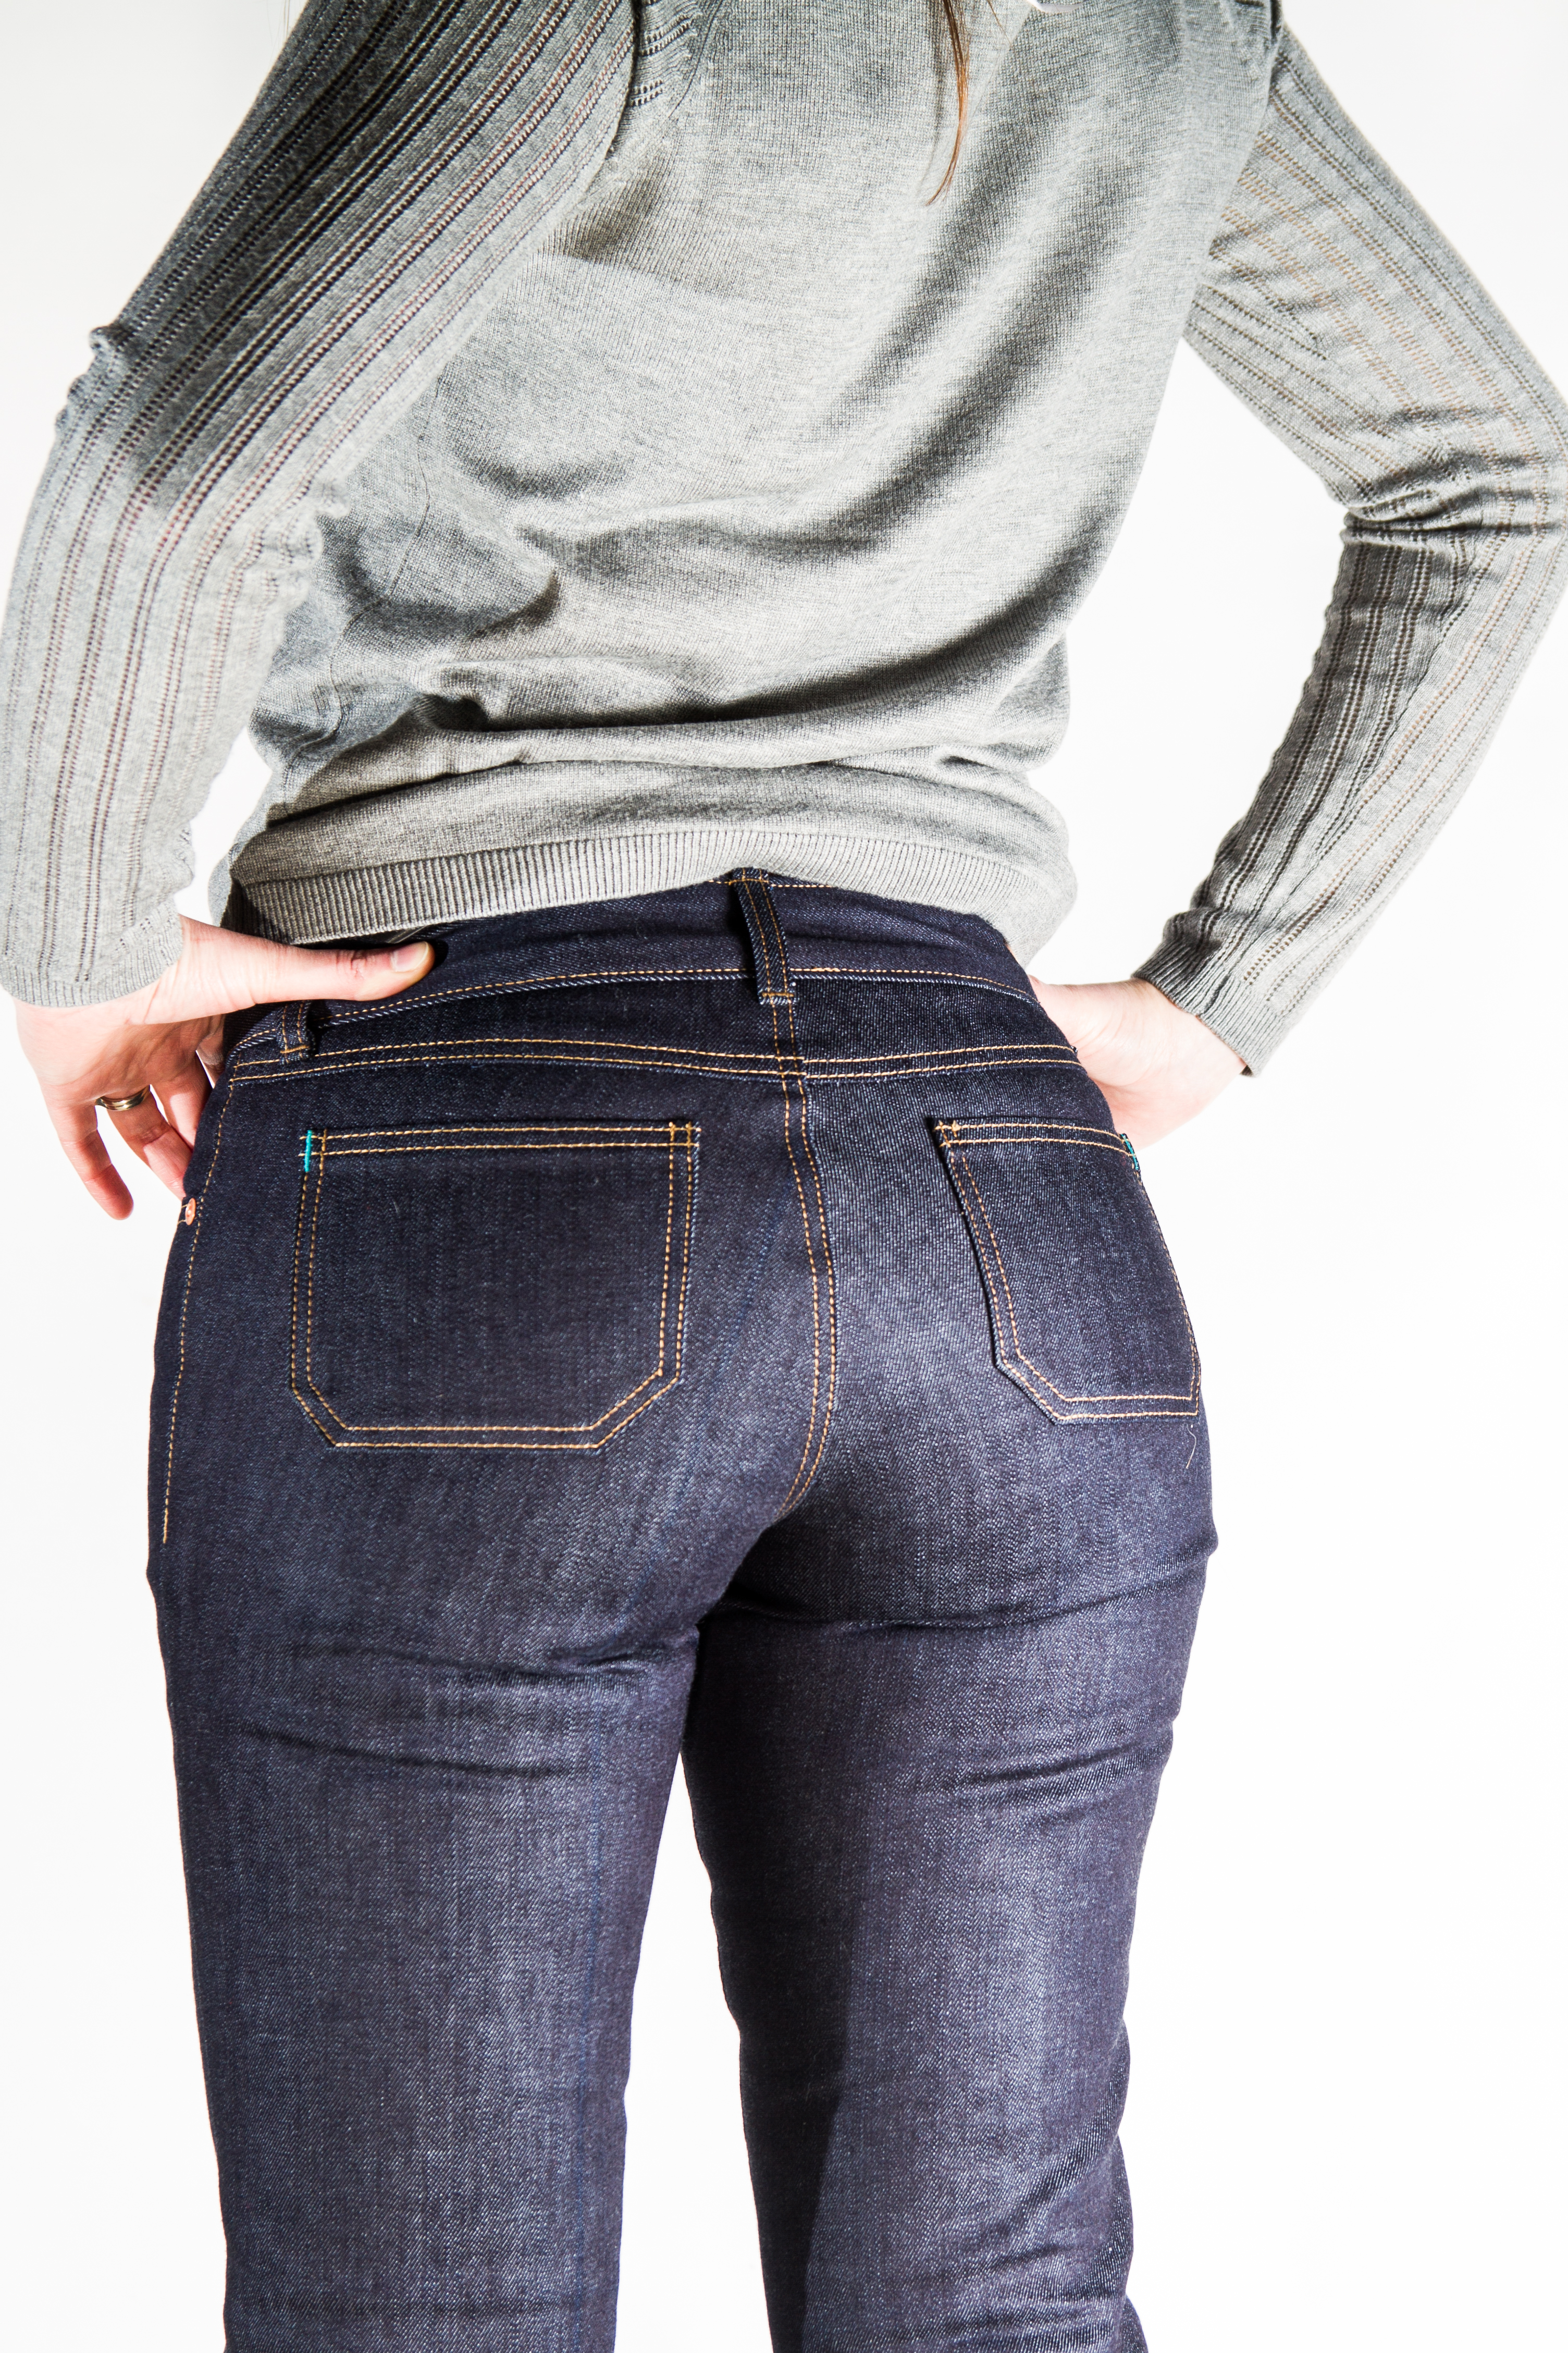 Jeans backside photo